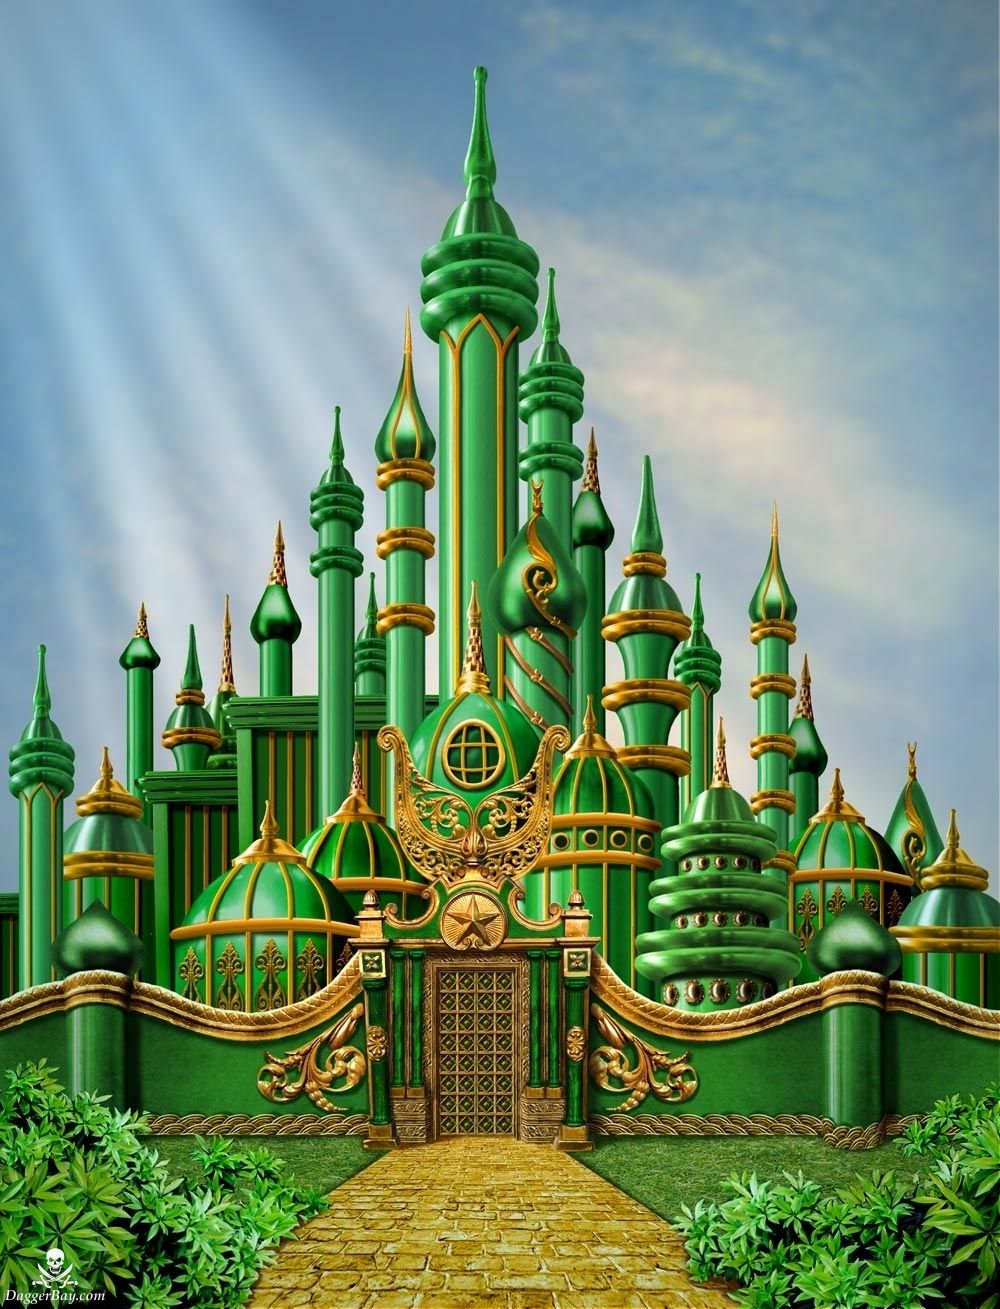 Wizard Of Oz Road To Emerald City Casino